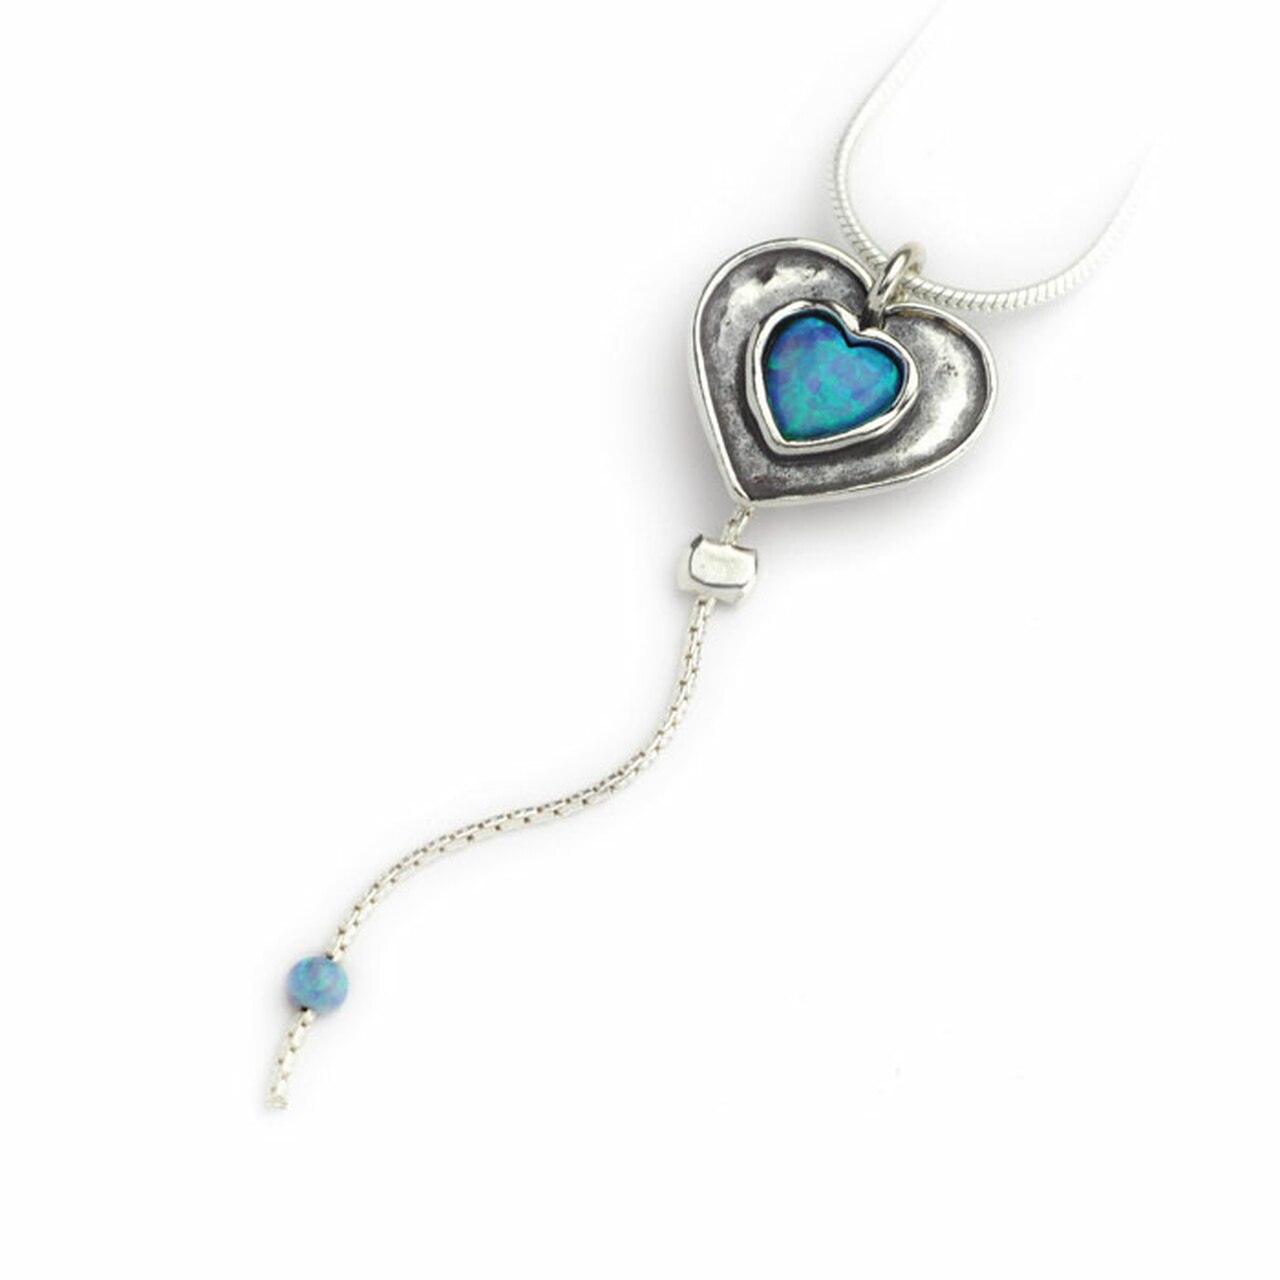 Opal Heart Necklace - The Nancy Smillie Shop - Art, Jewellery & Designer Gifts Glasgow